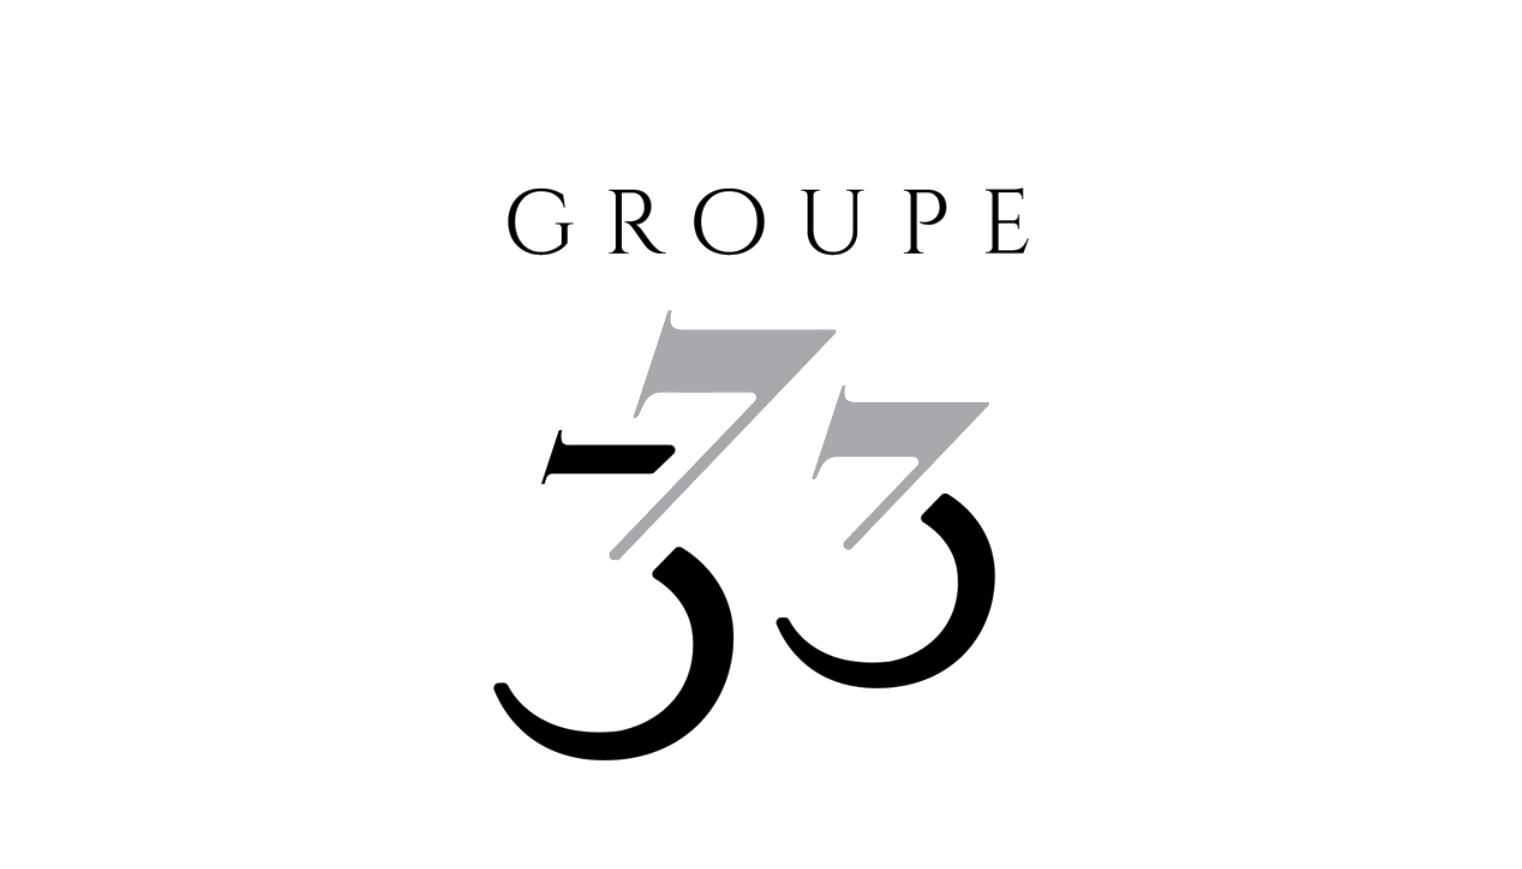 Groupe 3737